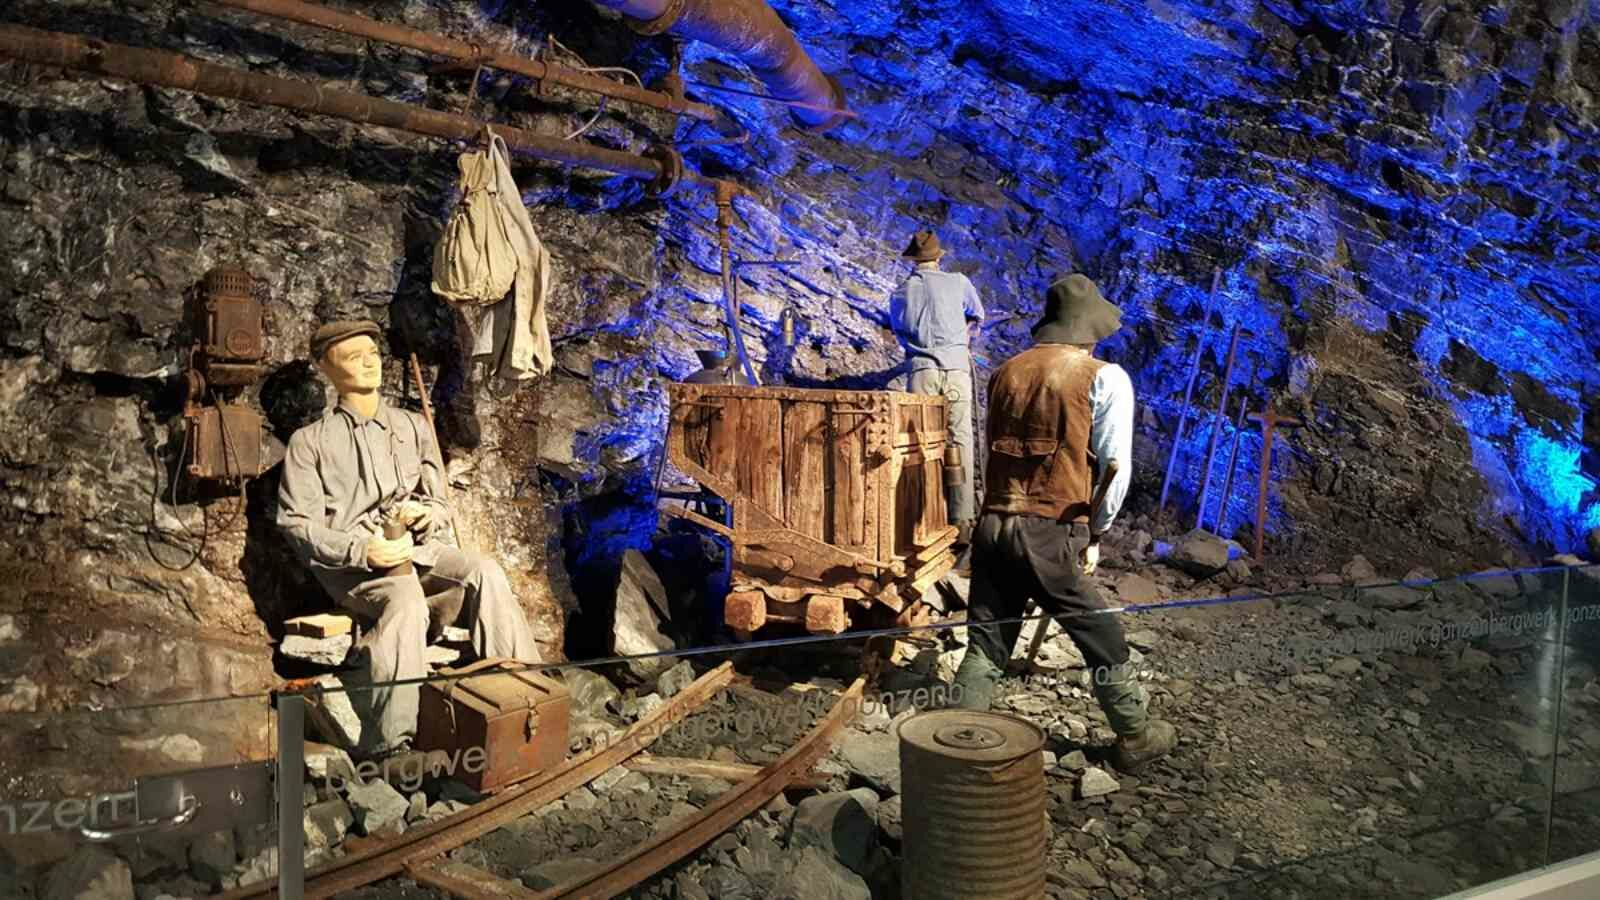 Time travel through the Eien mine